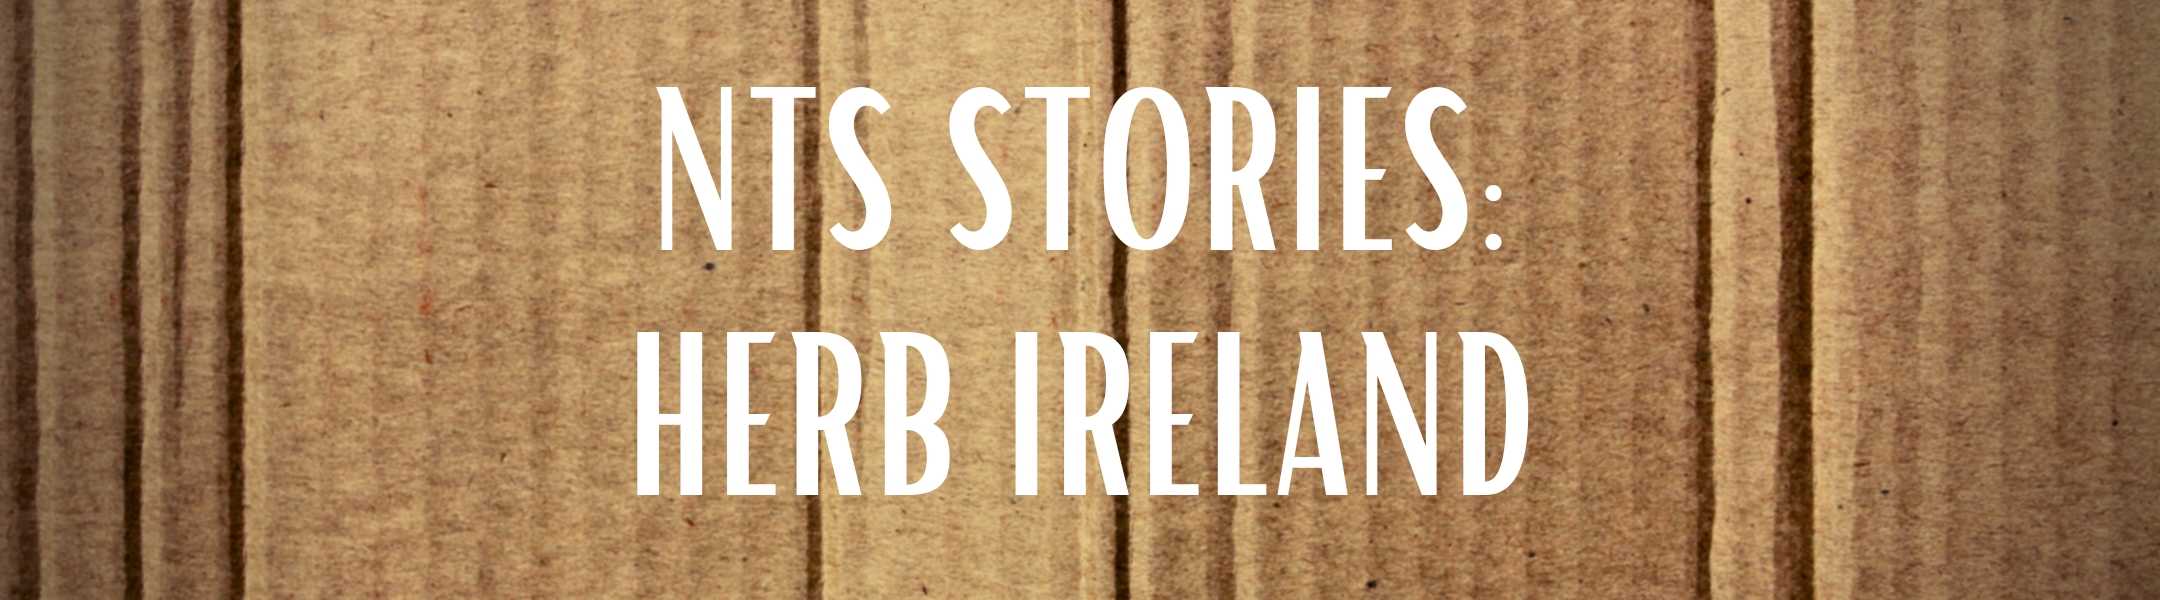 NTS Stories - Herb Ireland